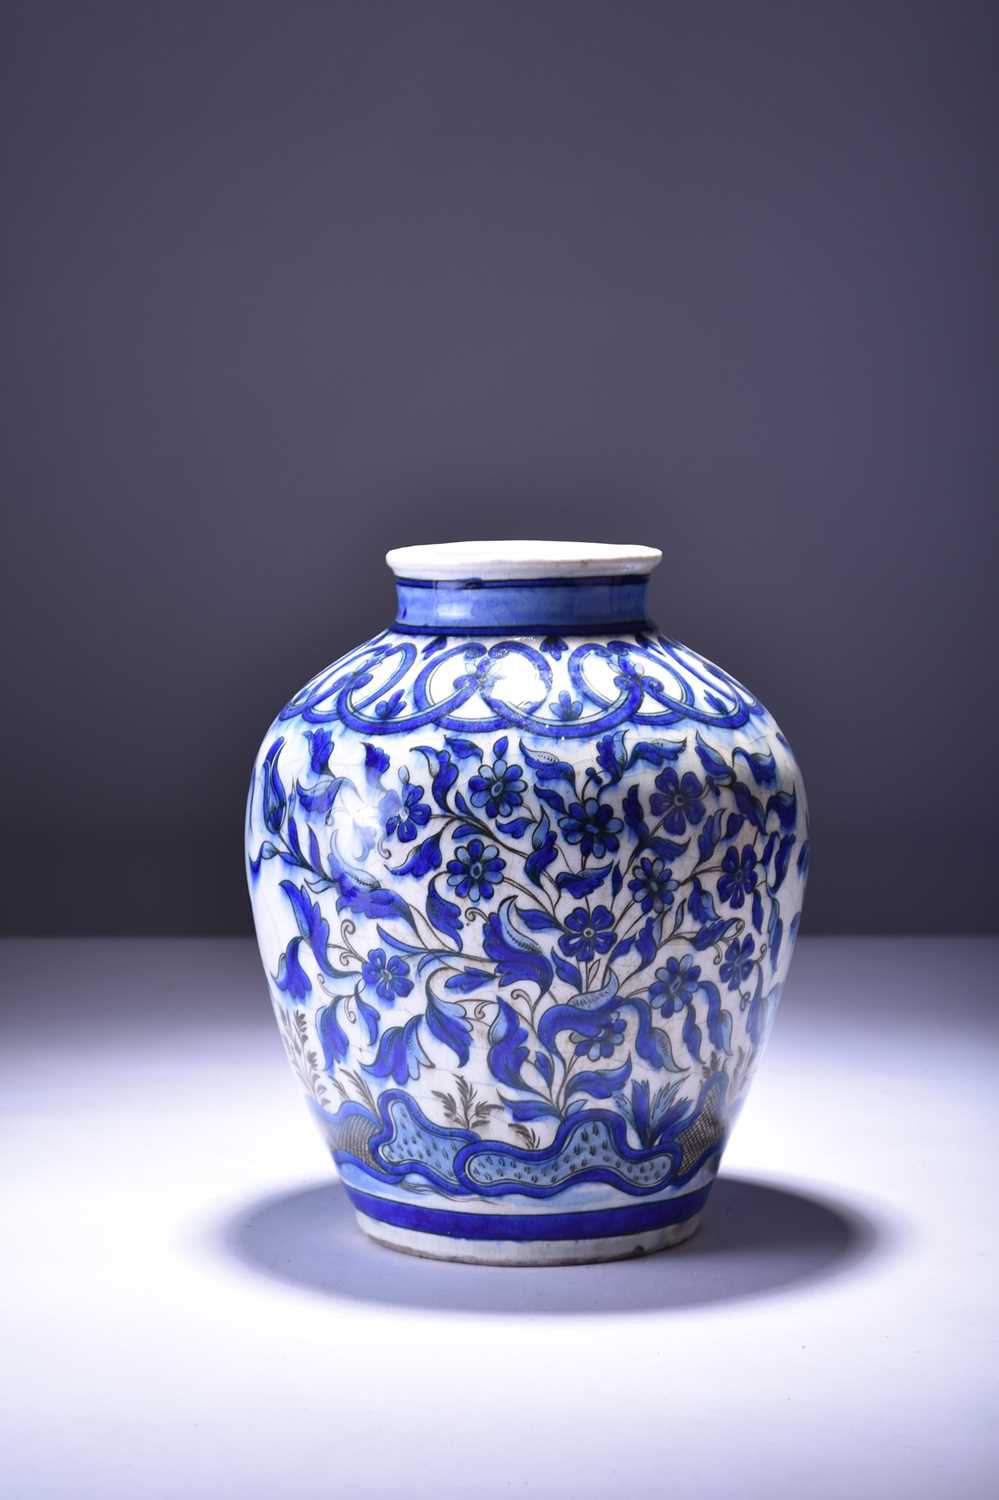 Lot 131 - A Kerman/Kirman style blue and white fritware vase, 20th century